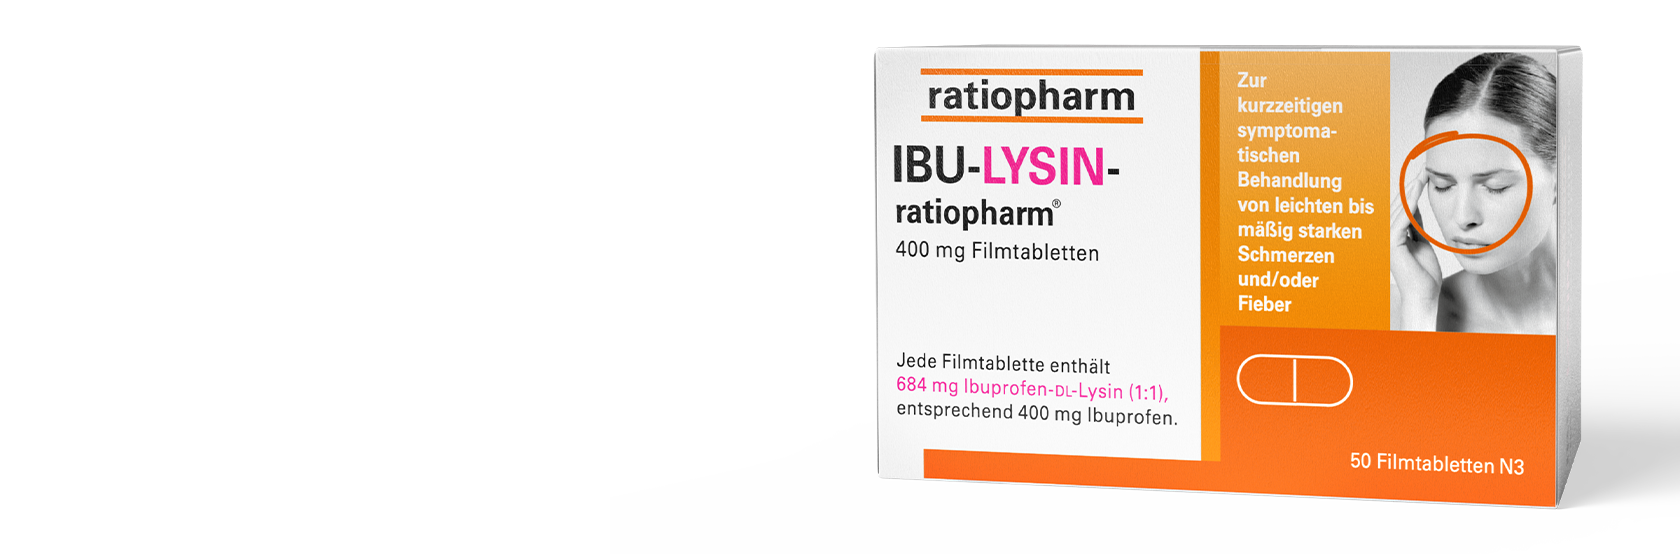 'pyrus – ratiopharm - Packaging - IBU-LYSIN